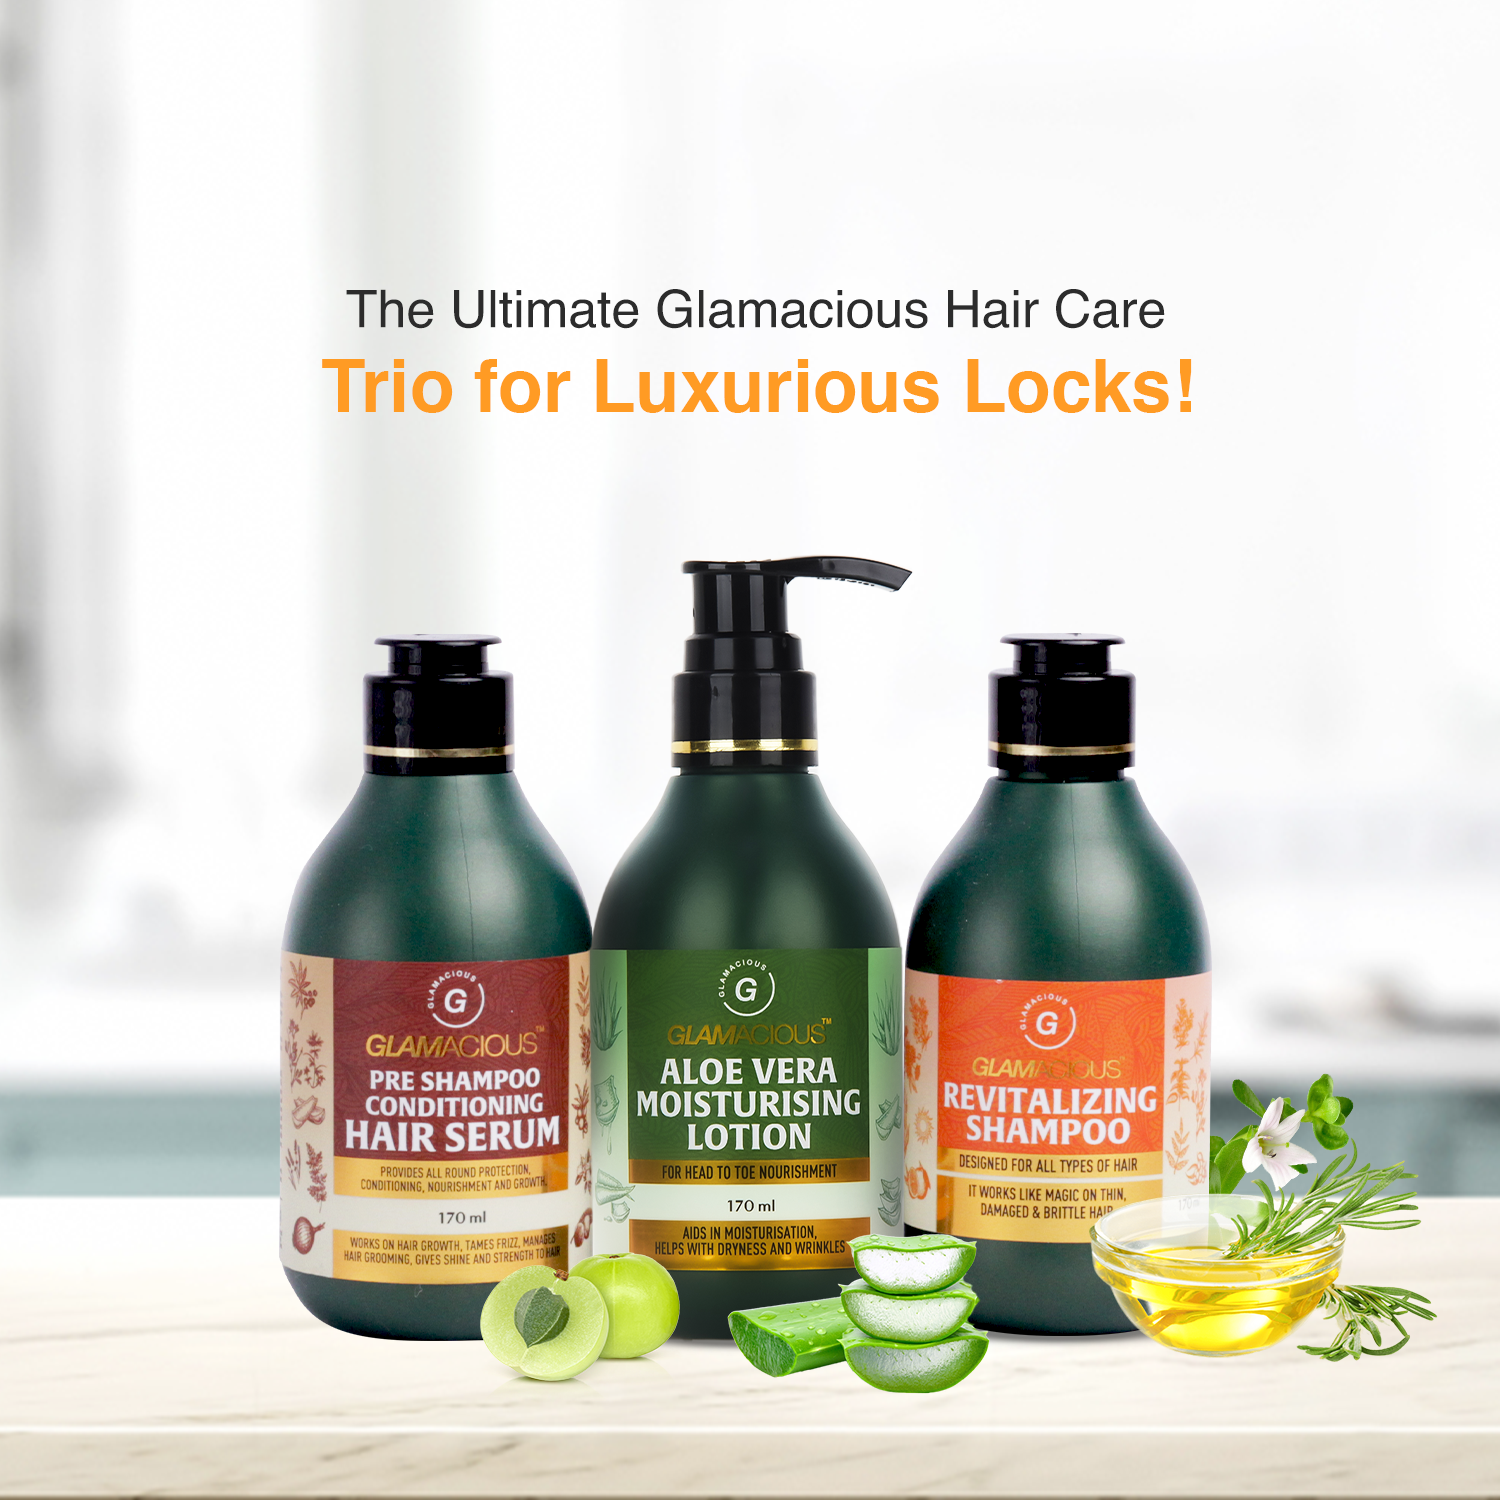 ​Pre-shampoo conditioning hair serum+ Revitalizing shampoo+ Aloe vera moisturising lotion - Glamacious